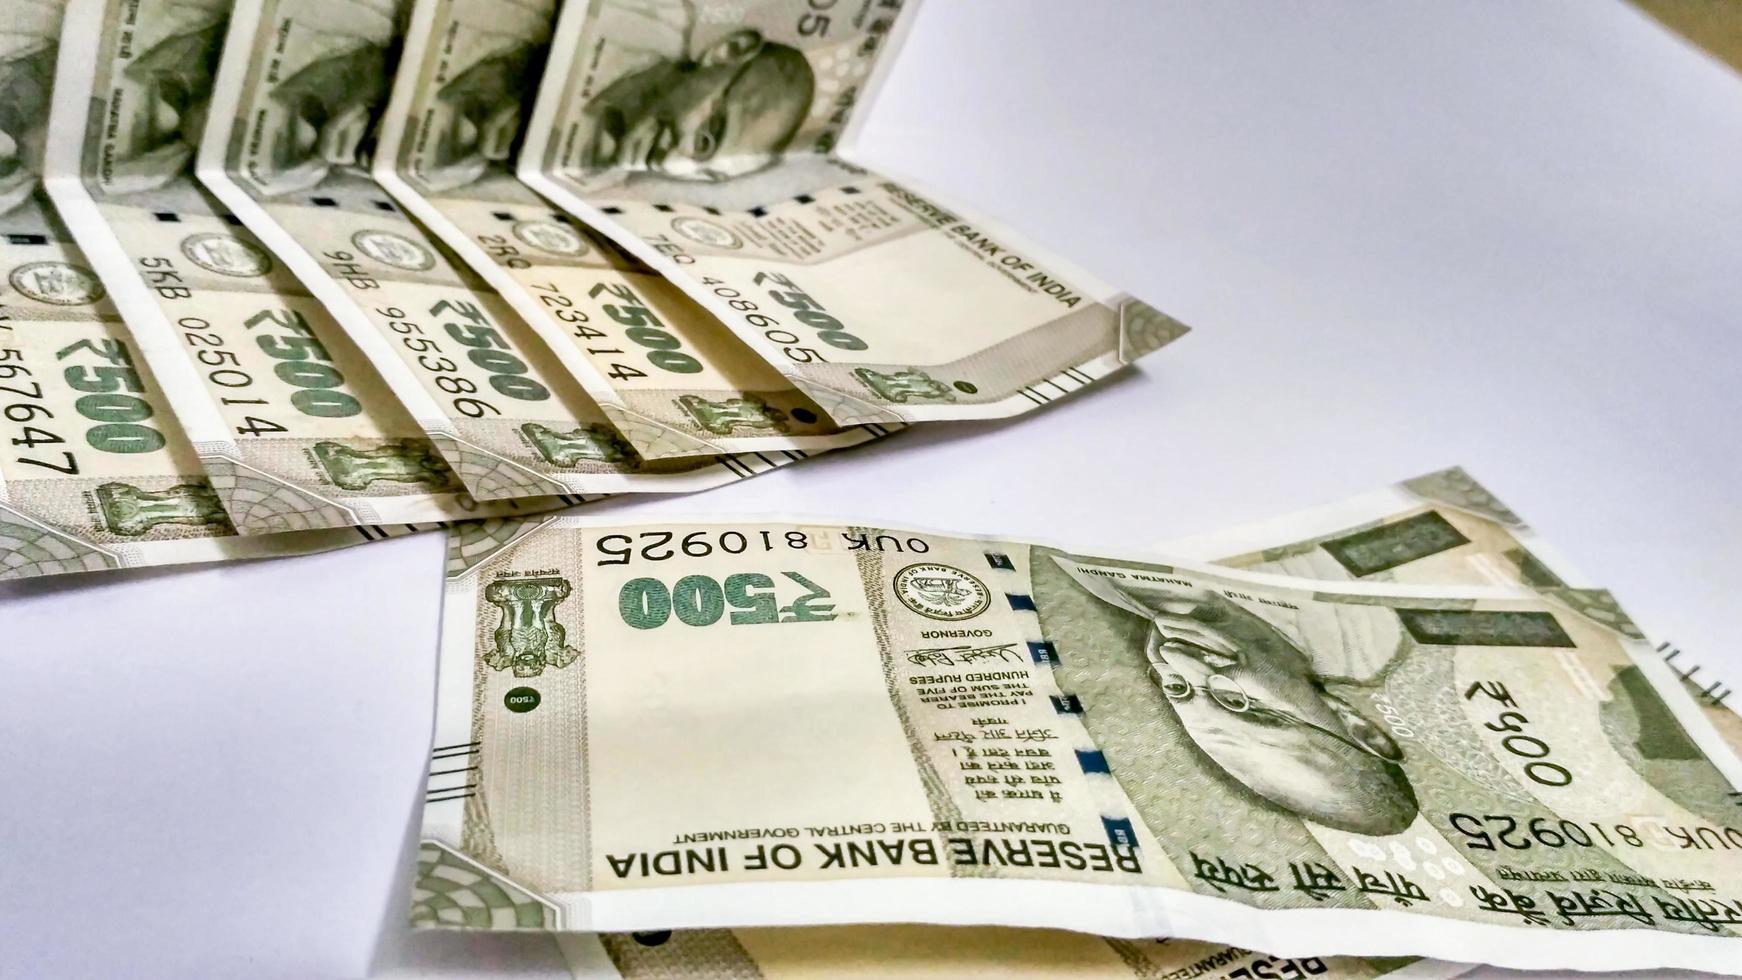 500 roepies collectie Indiase valuta foto